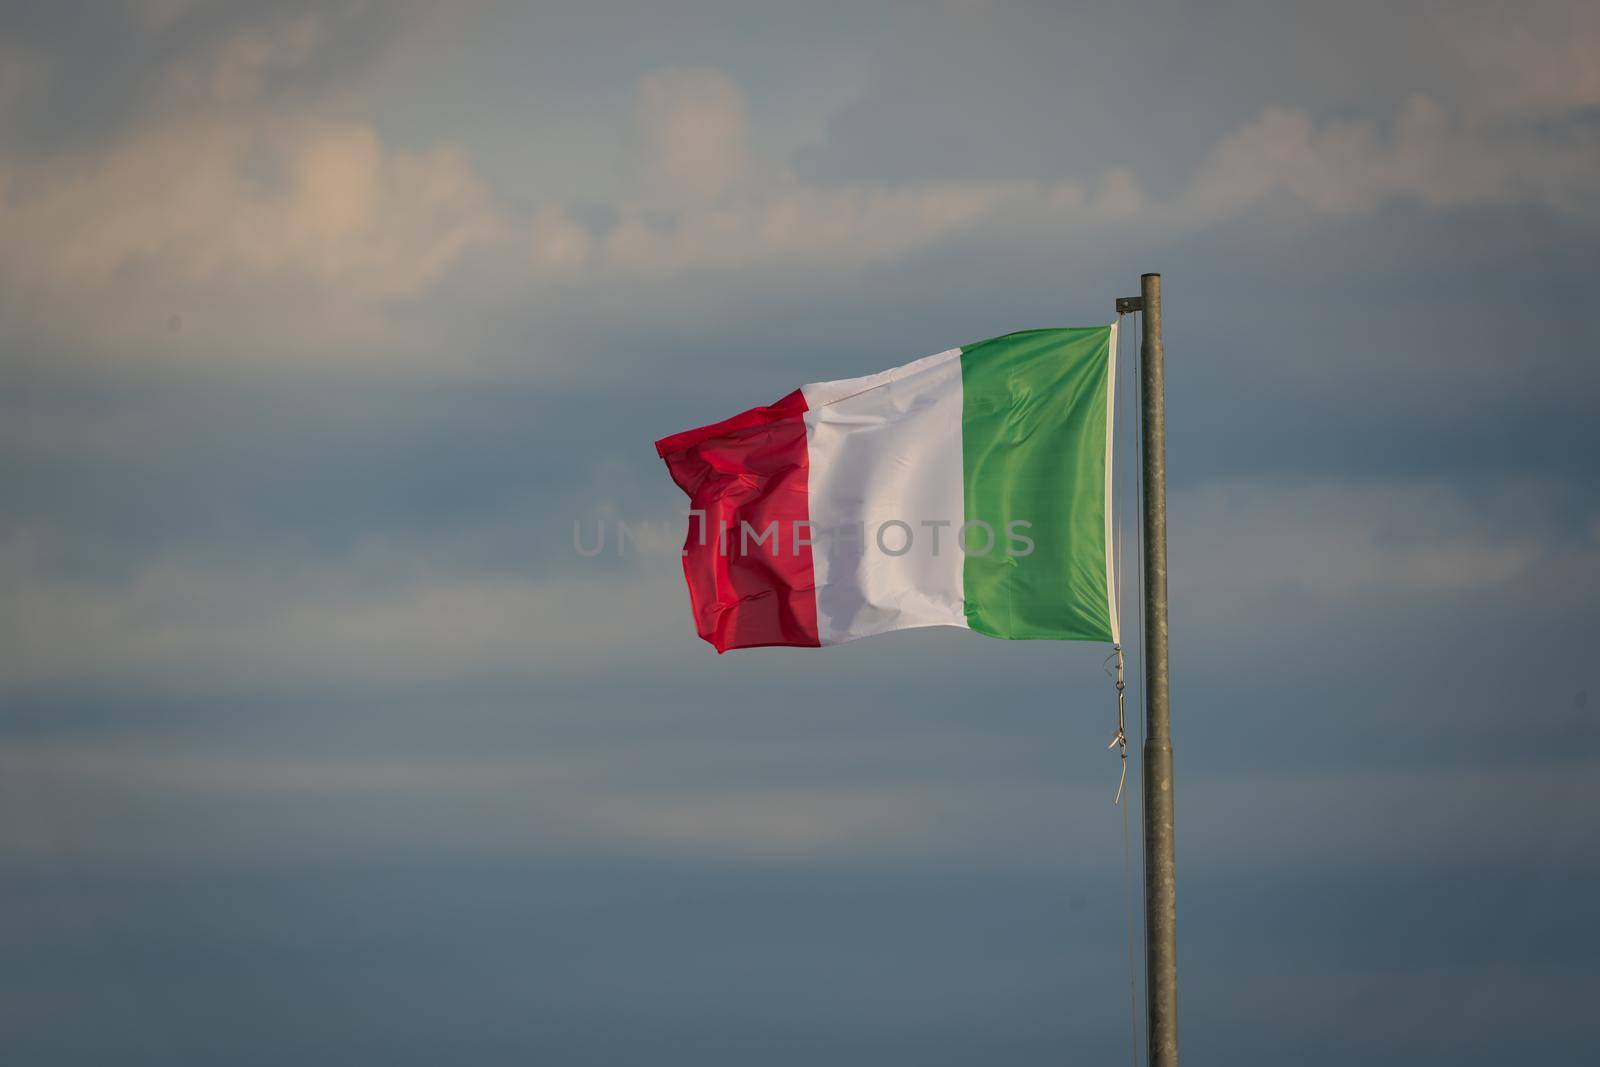 Large Italian flag waving in the wind by Robertobinetti70